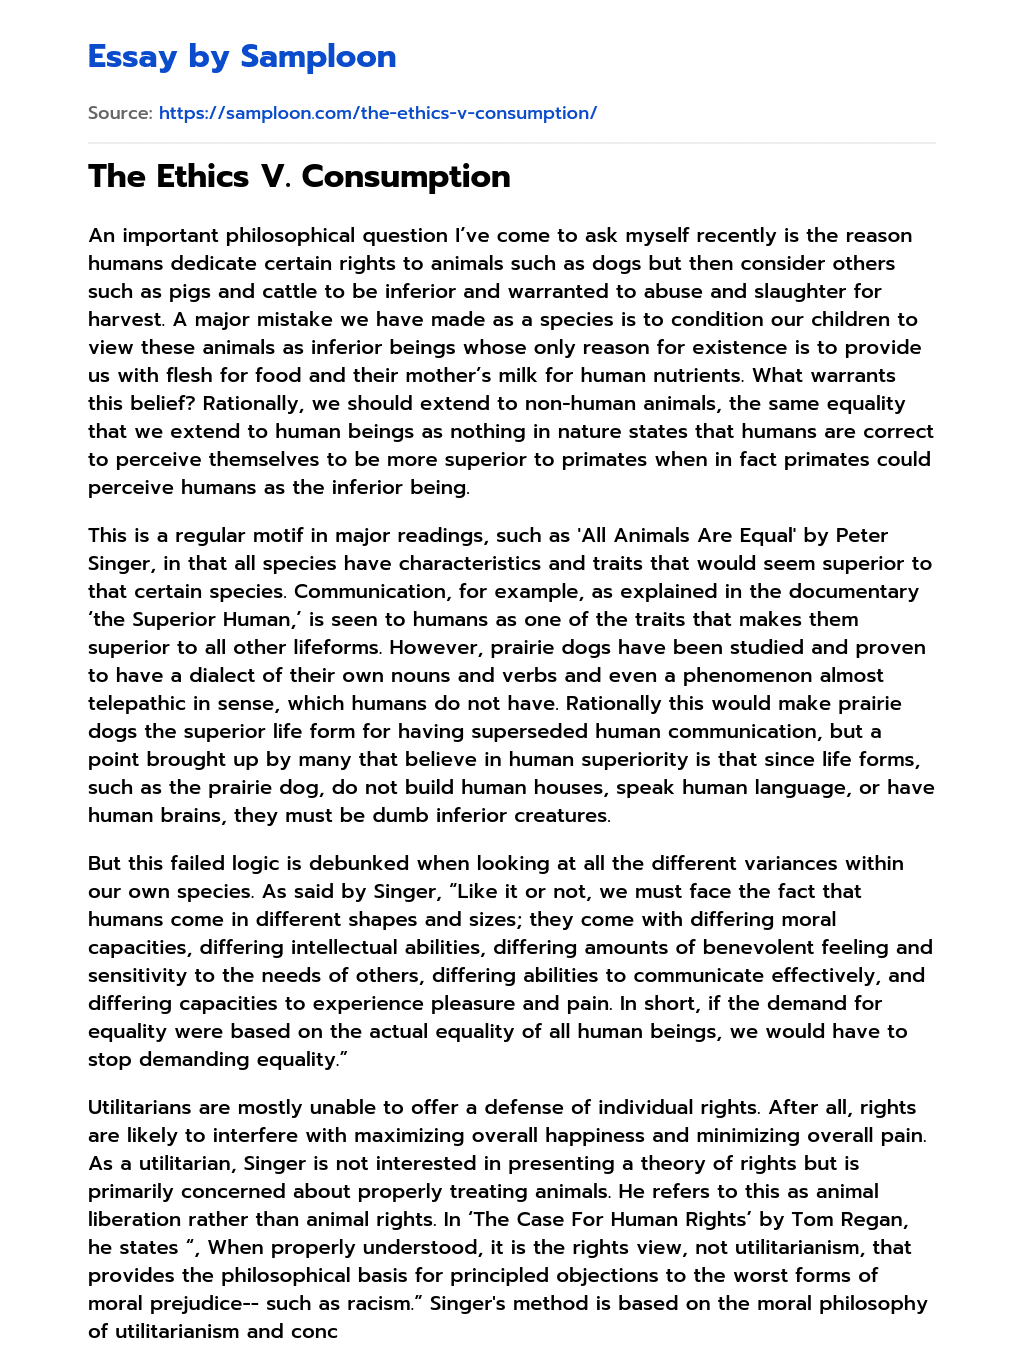 The Ethics V. Consumption  essay